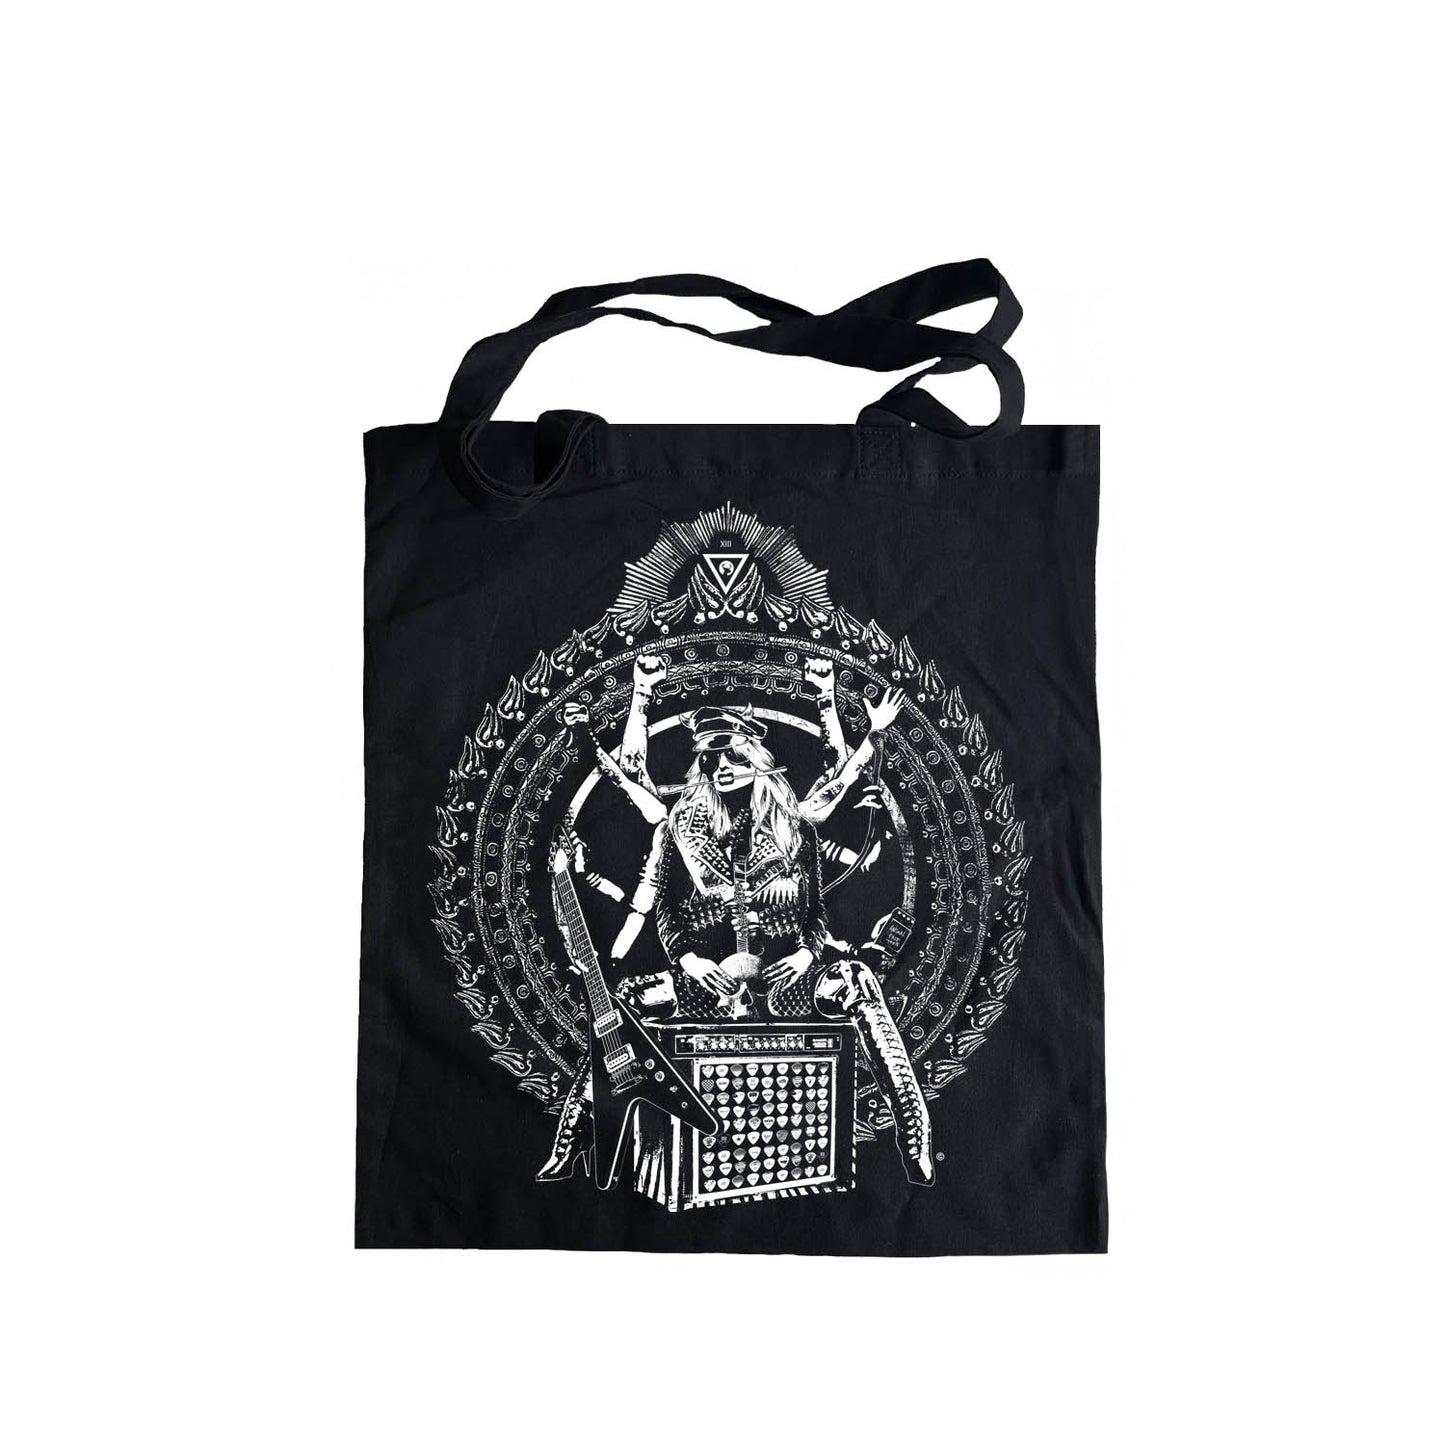 Guitar Shiva Tote Bag, Graphic Tote Bag, Heavy Metal Tote, Guitar Gift, Hindu deity Shiva, Tattoo